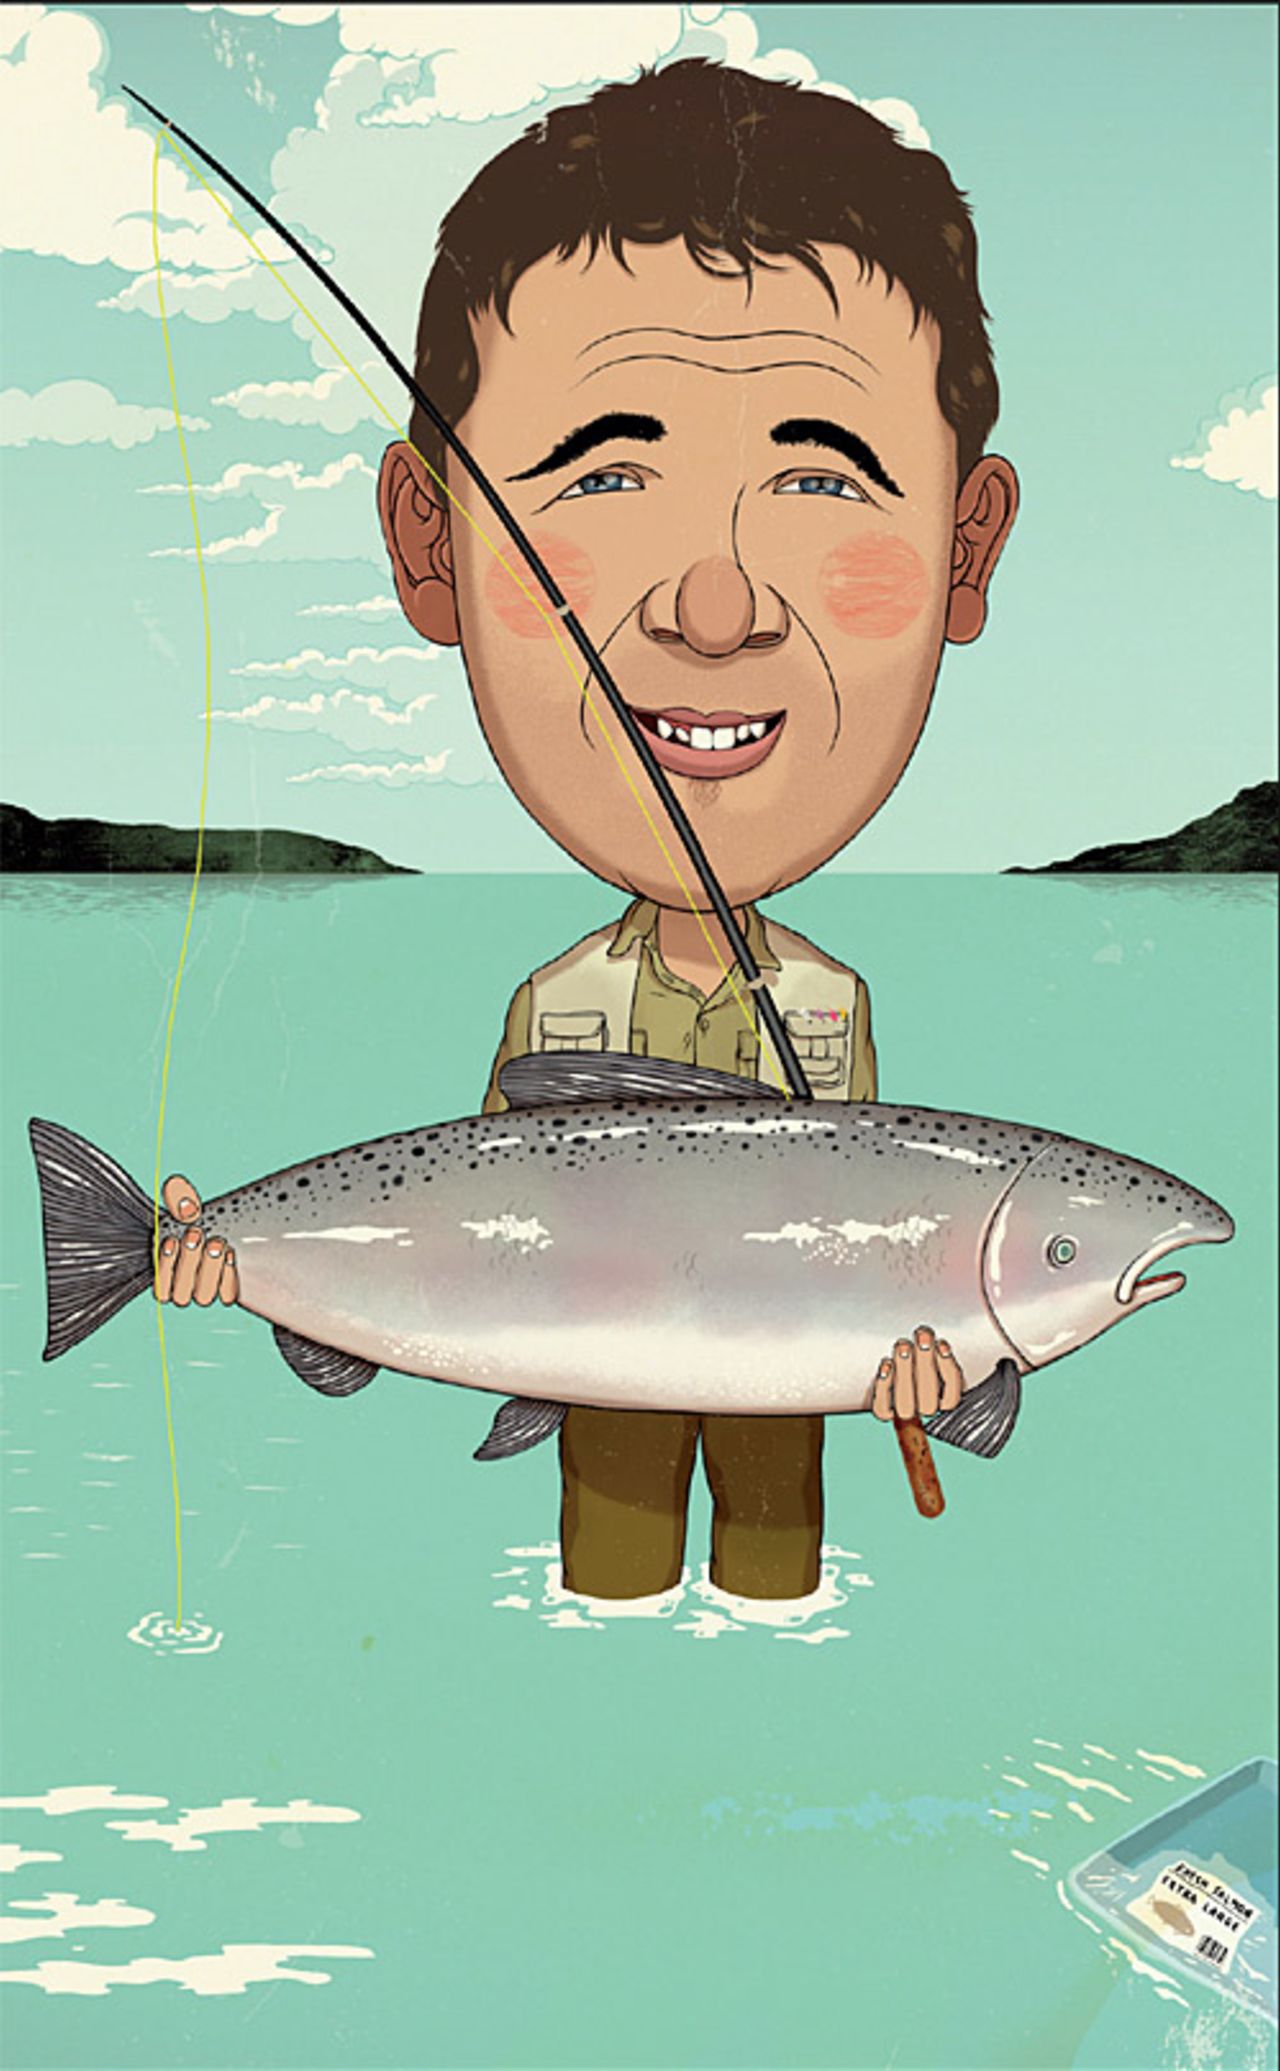 Cartoon of Robert Croft fly-fishing